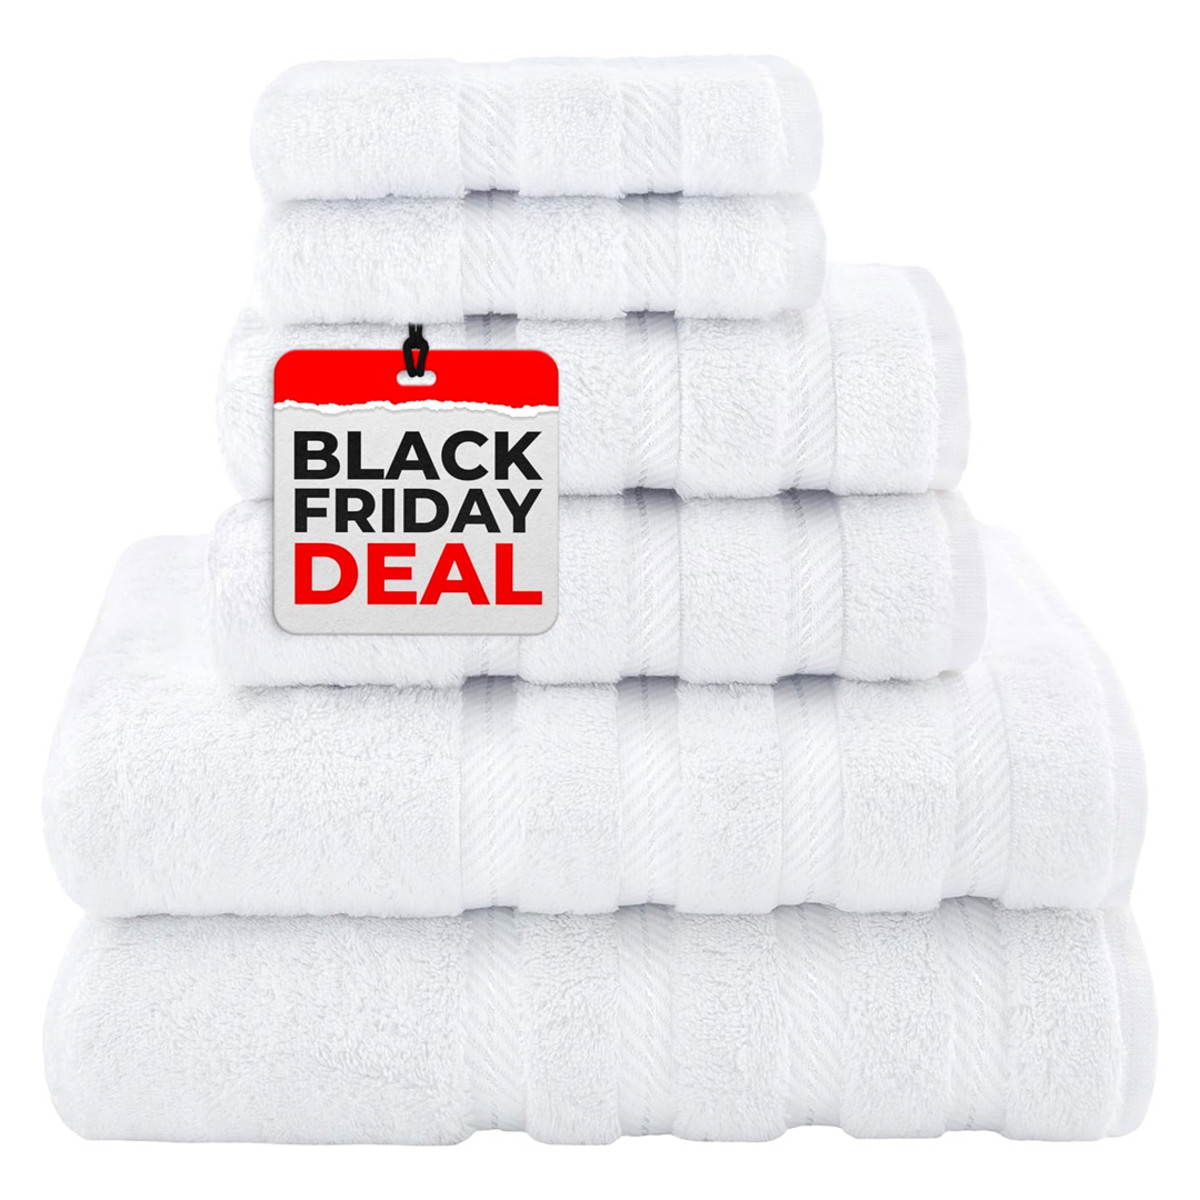 s bestselling towel set is 58% off on Black Friday 2023